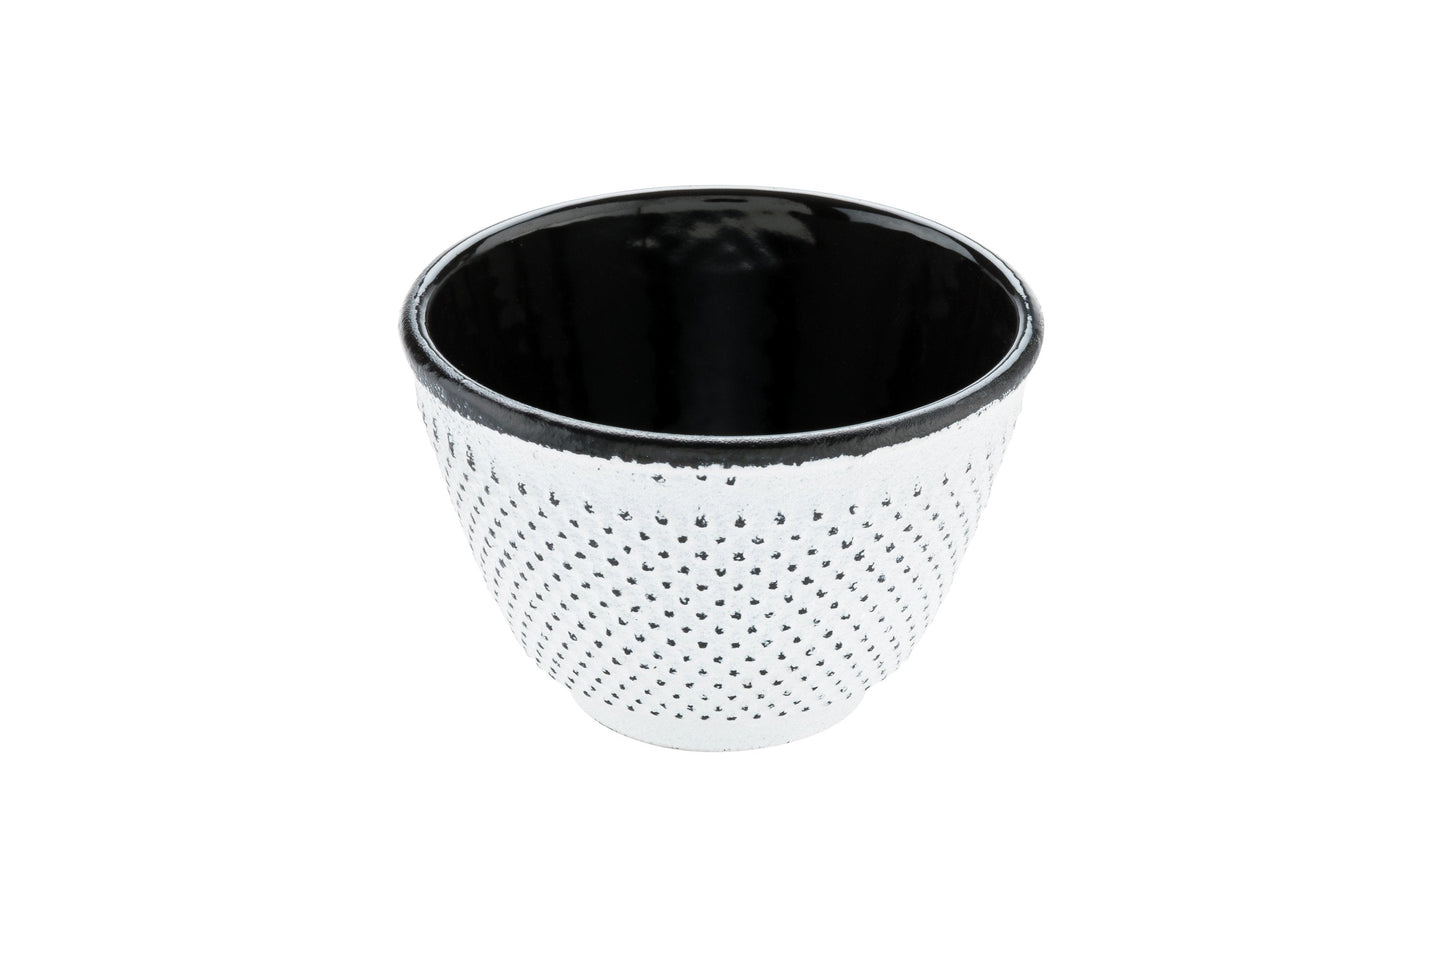 Tetsubin 4 oz White Cast Iron Tea Cup - Hobnail - 3" x 3" x 3 1/4" - 2 count box